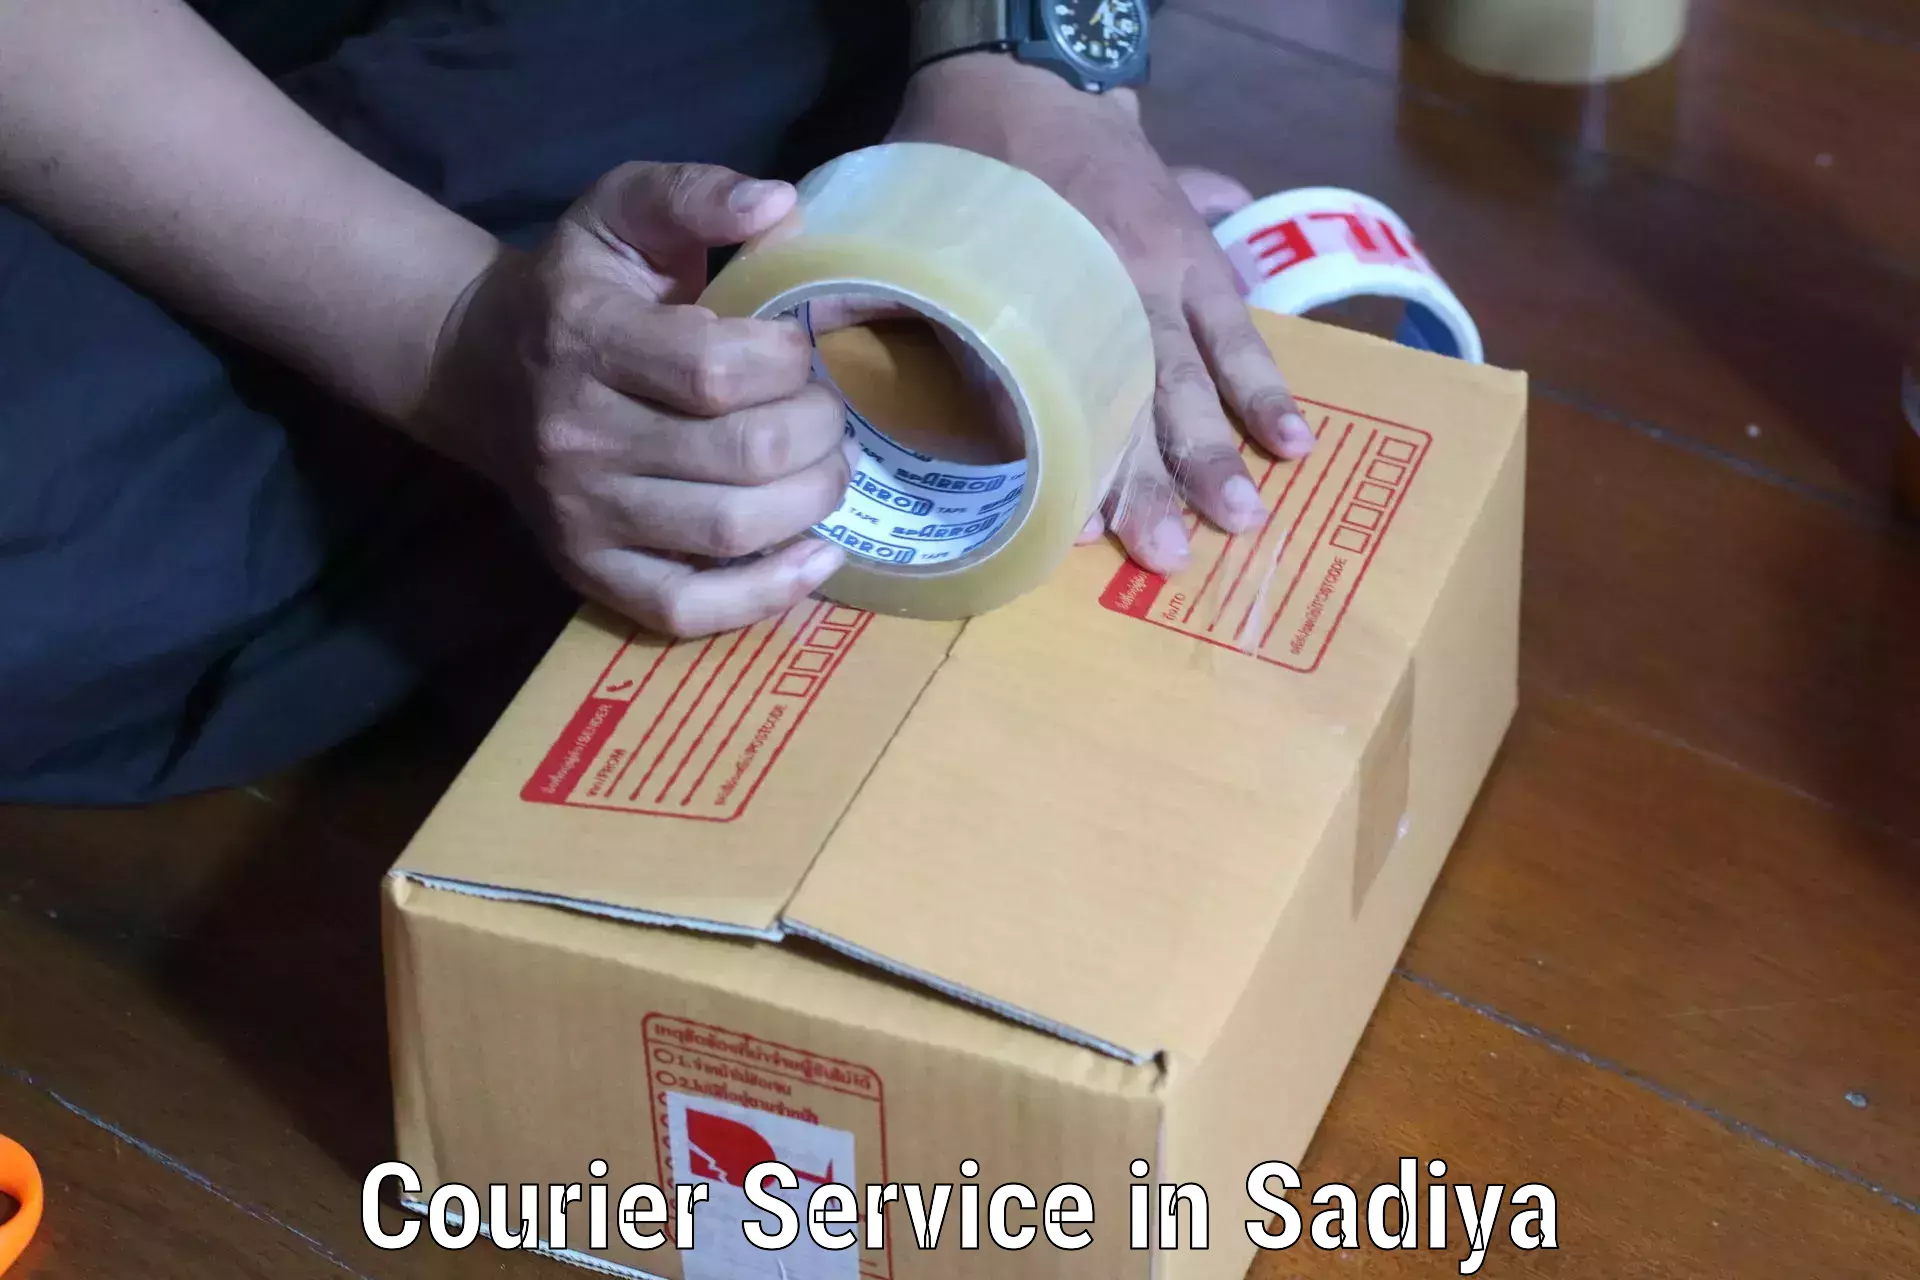 User-friendly delivery service in Sadiya